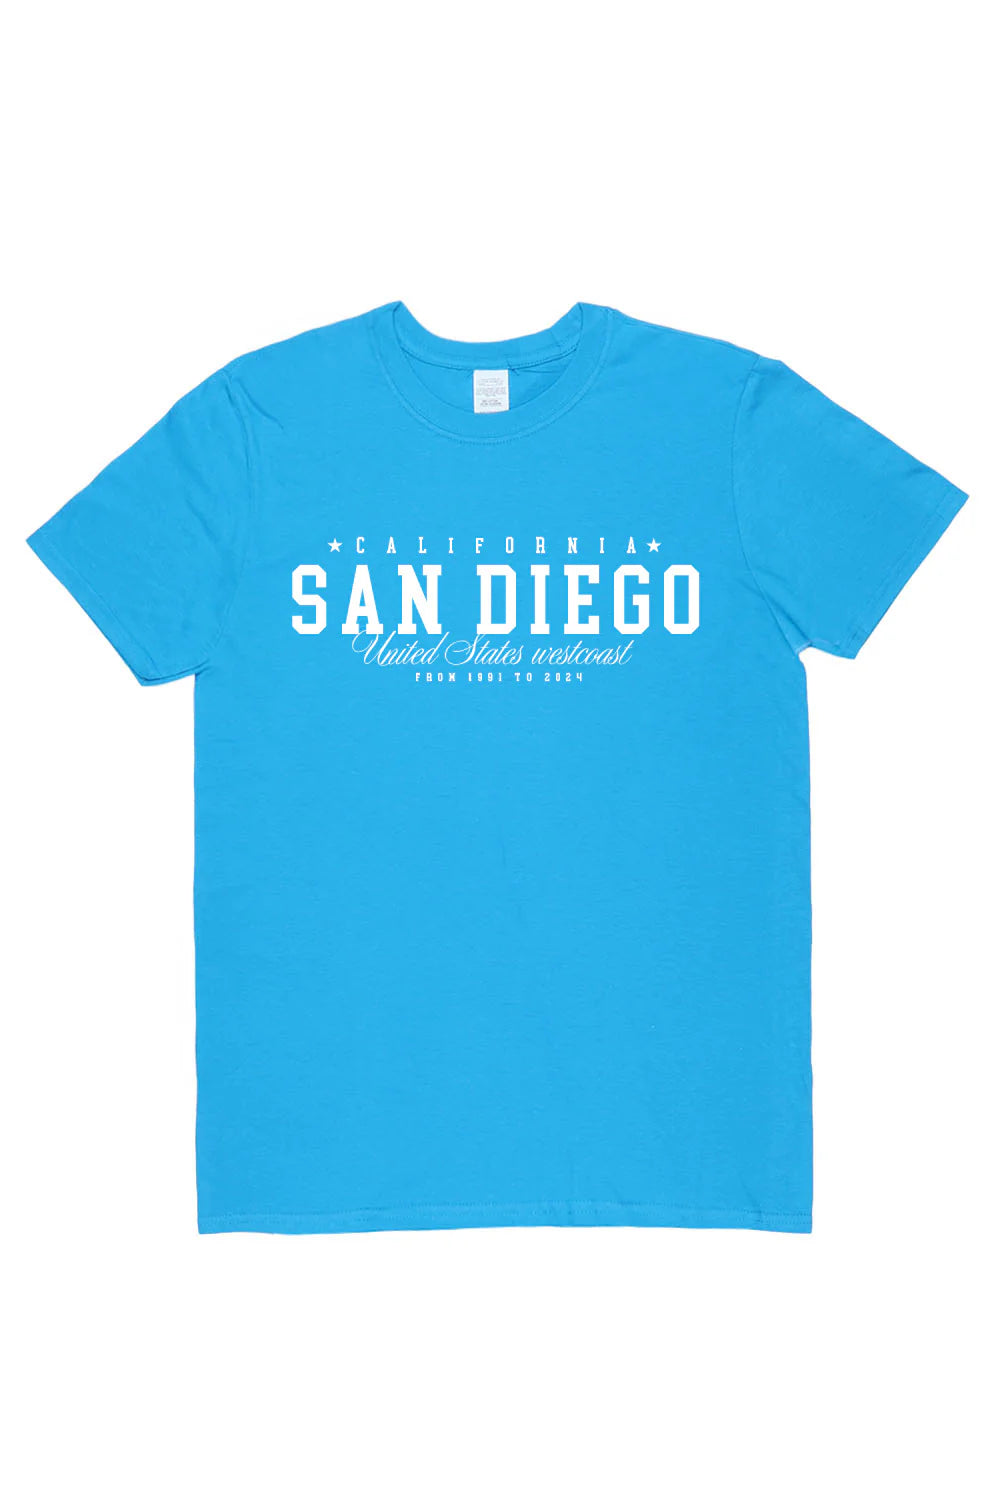 San Diego T-Shirt